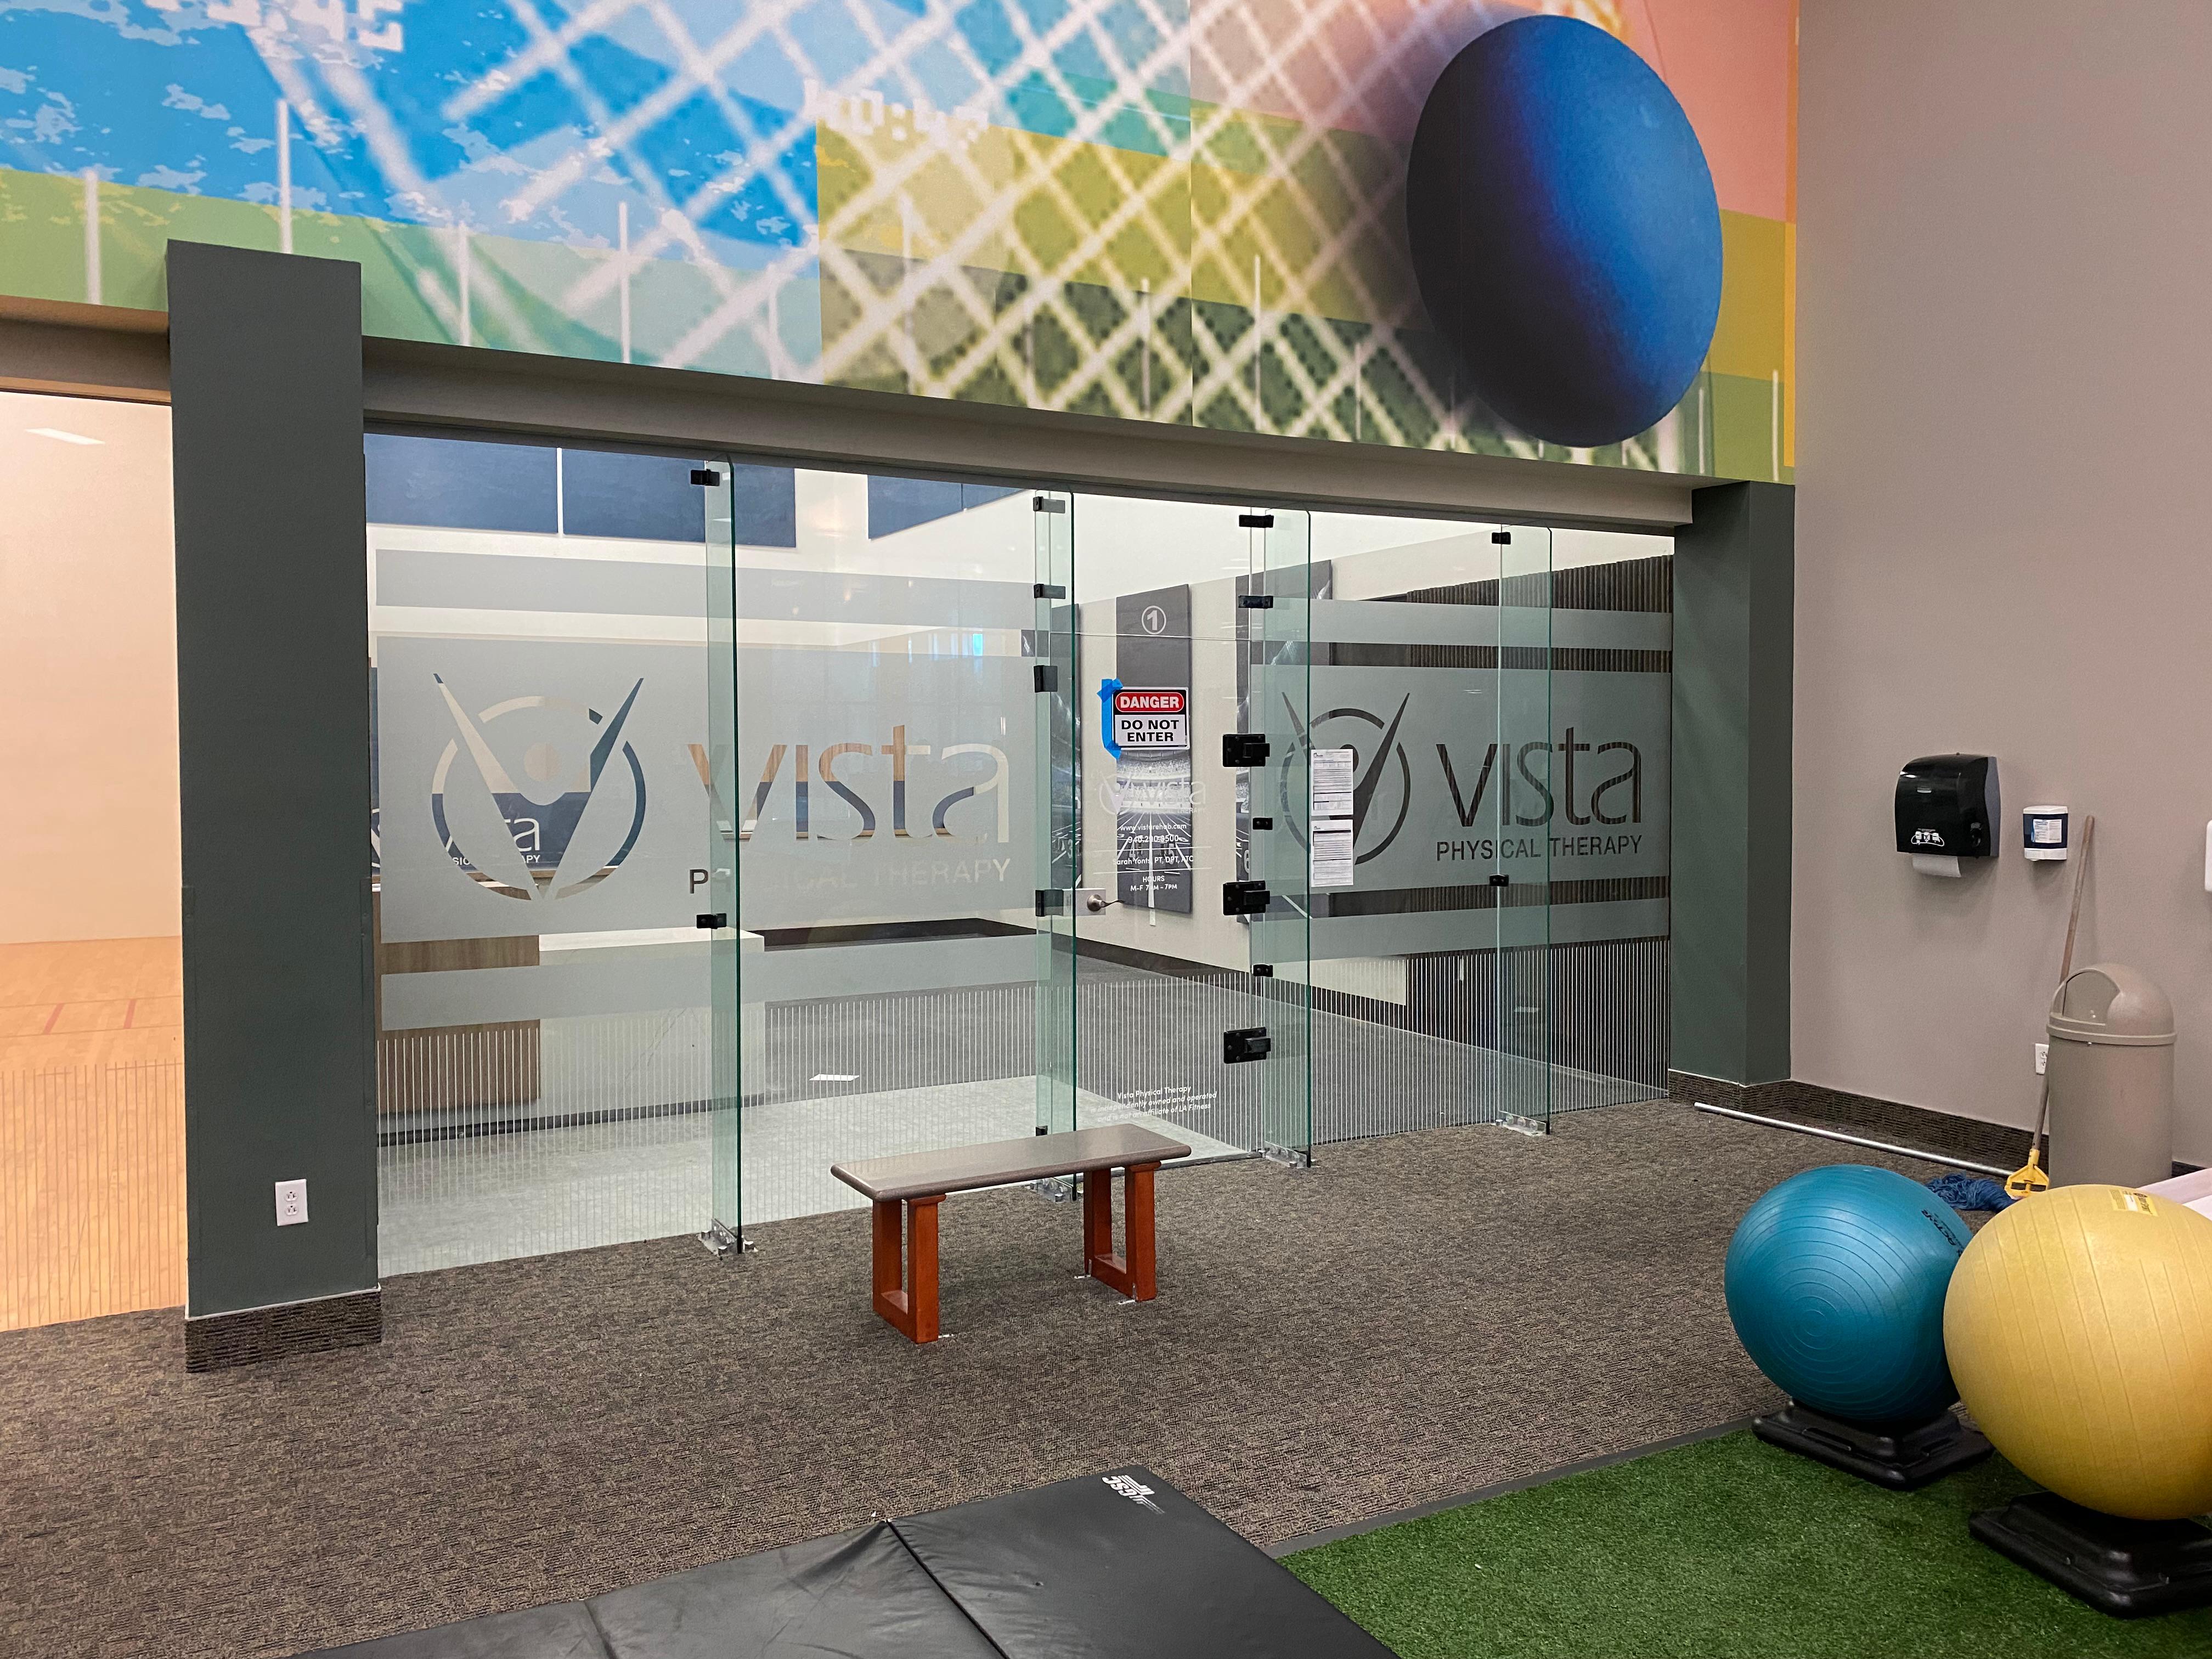 Vista Physical Therapy Denton at LA Fitness Vista Physical Therapy - Denton at LA Fitness Denton (940)290-0500